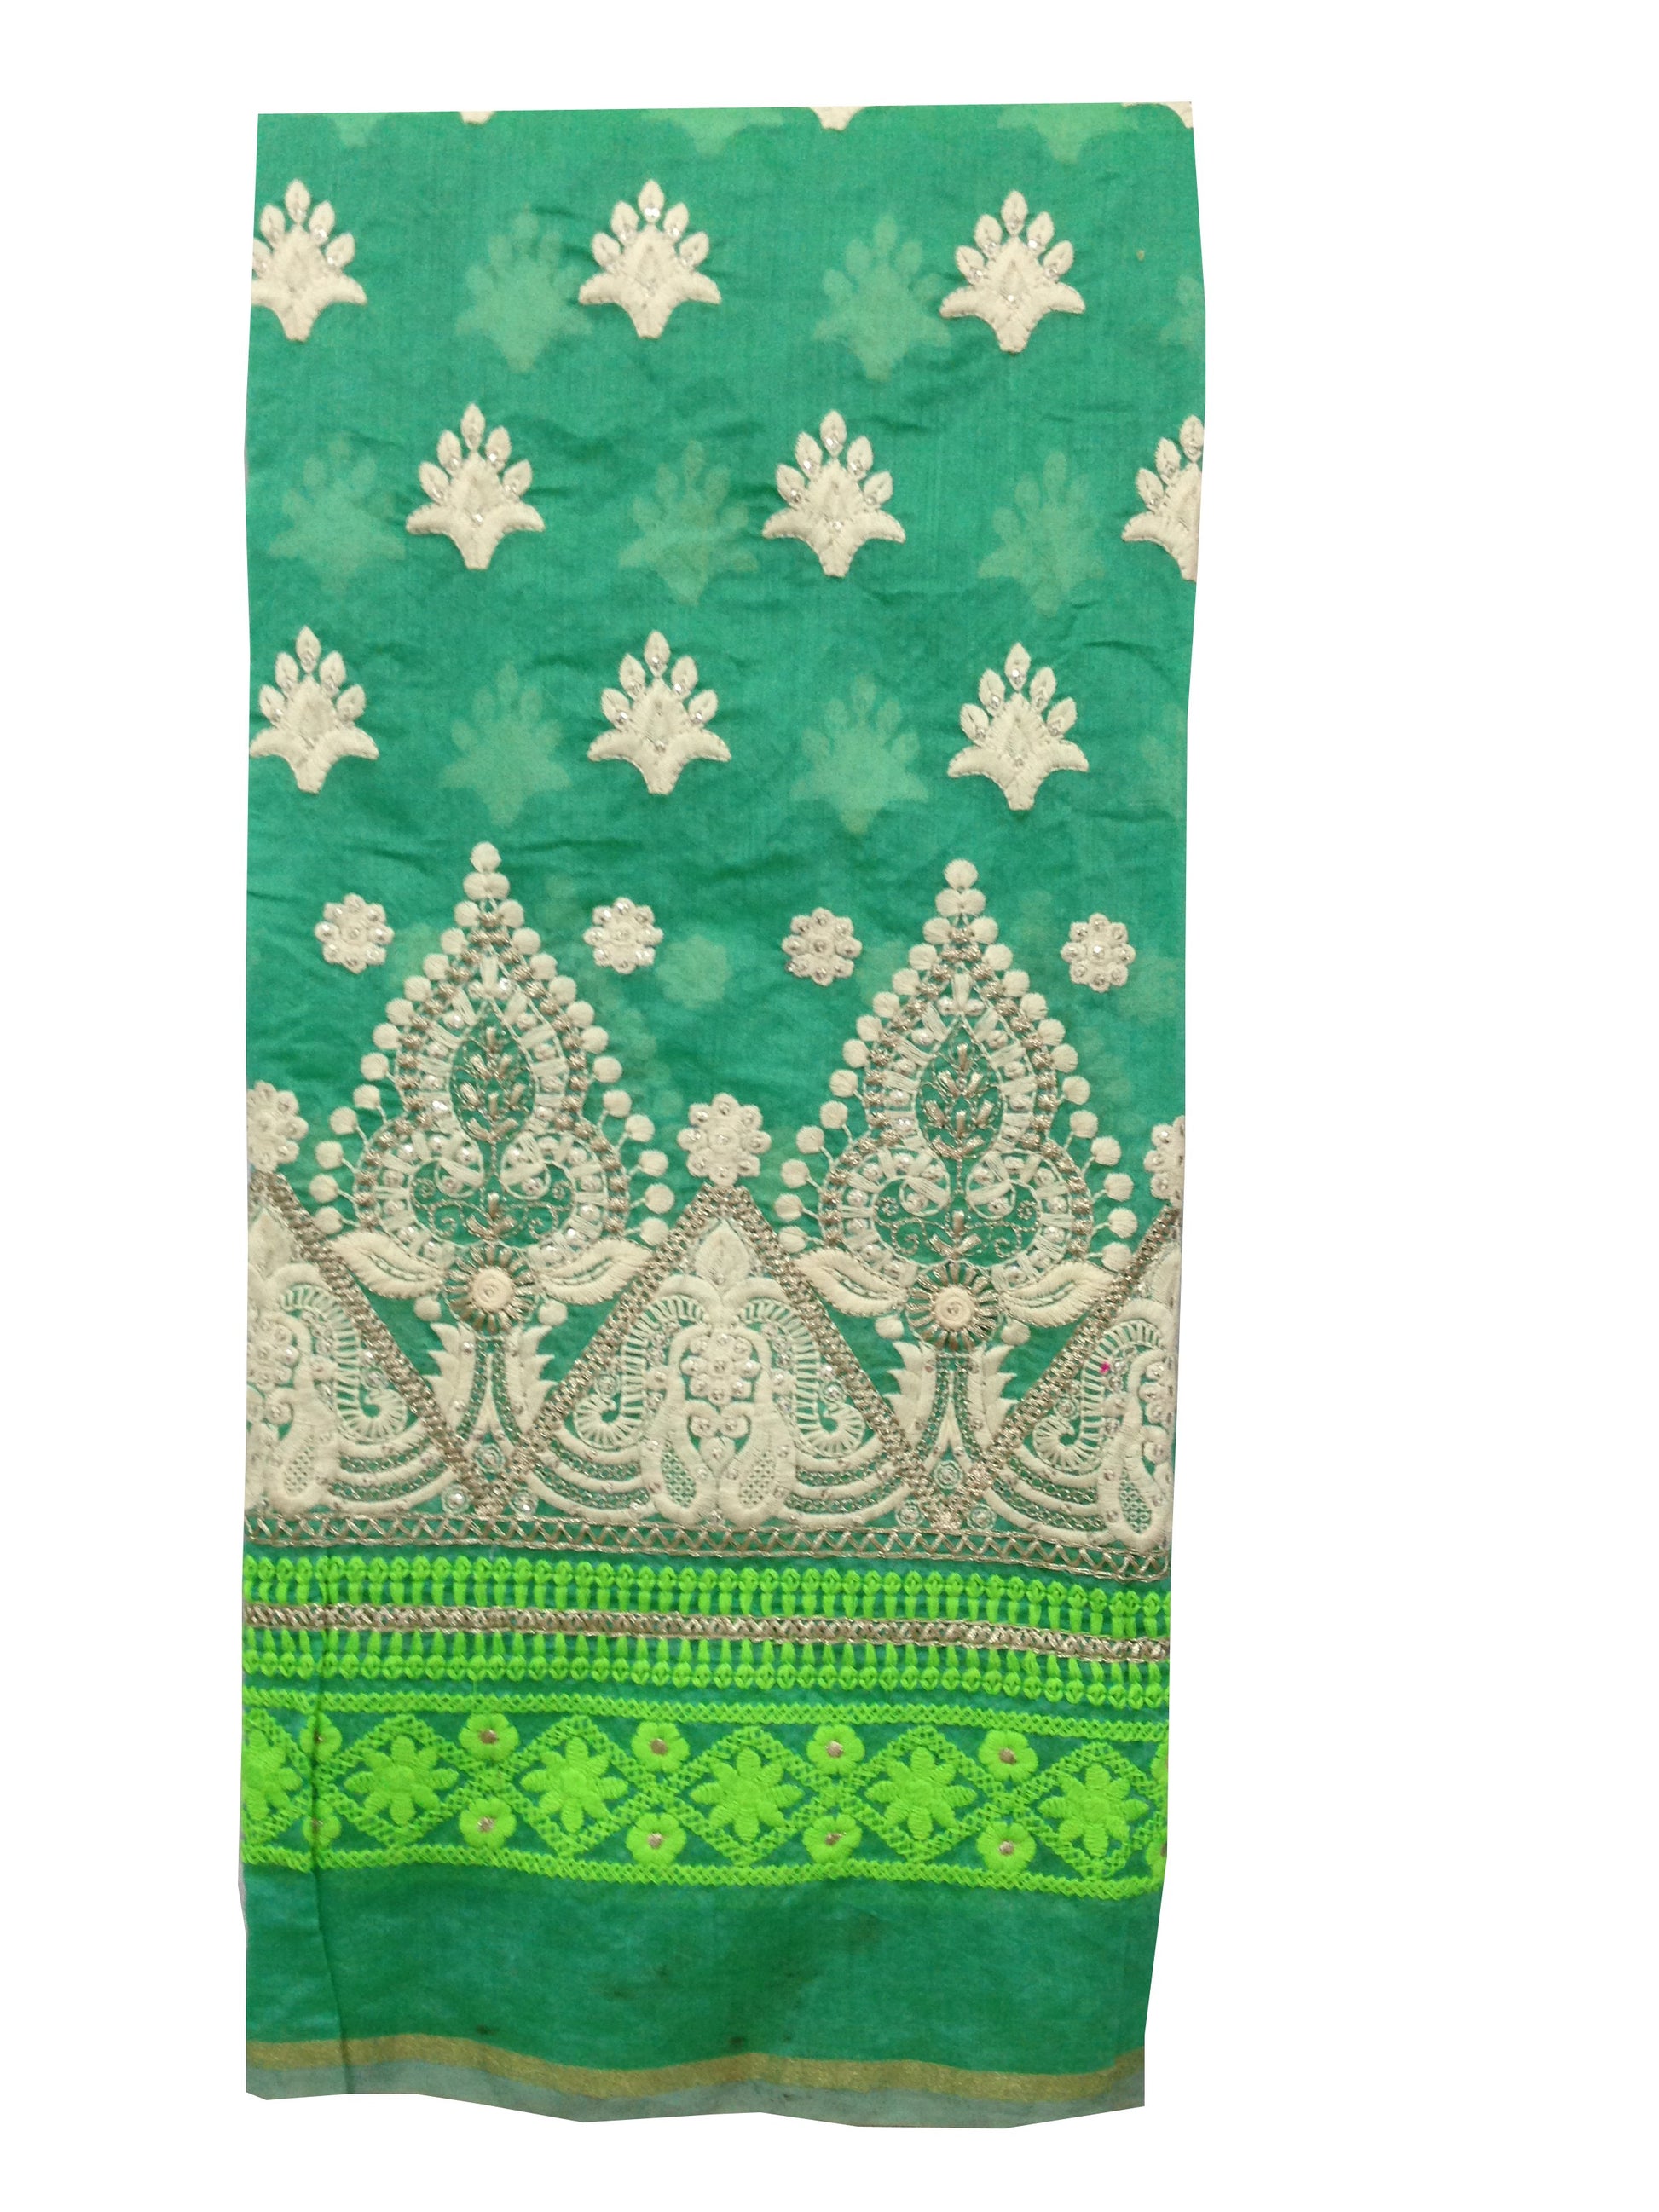 Chanderi Sea Green white Embroidered Fabric Material 